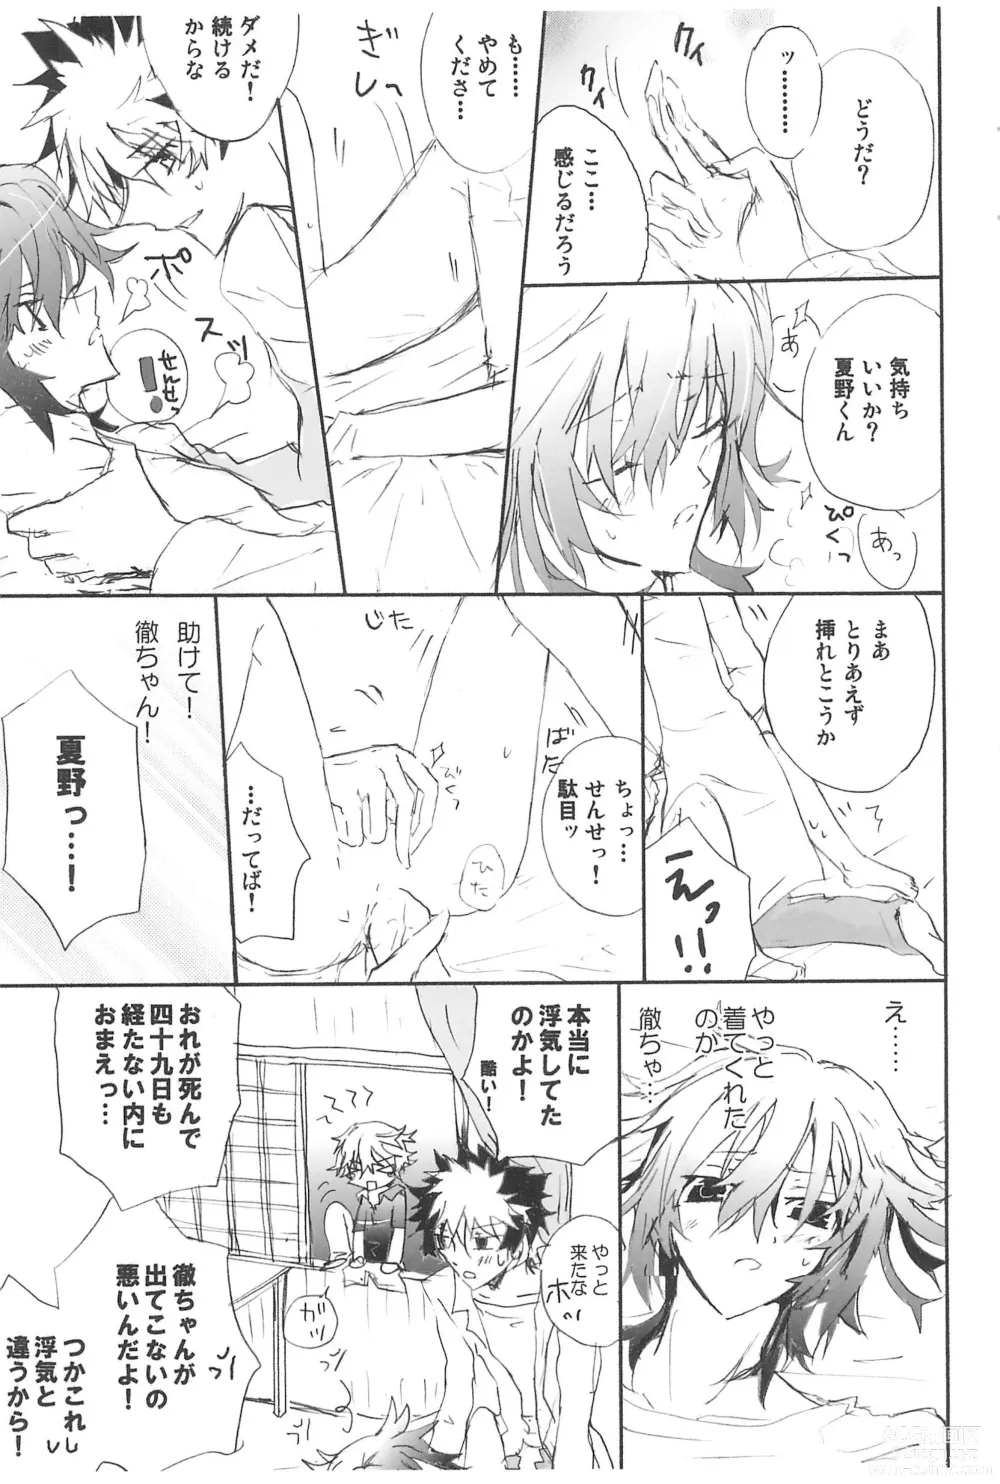 Page 15 of doujinshi Shiki-hon 10